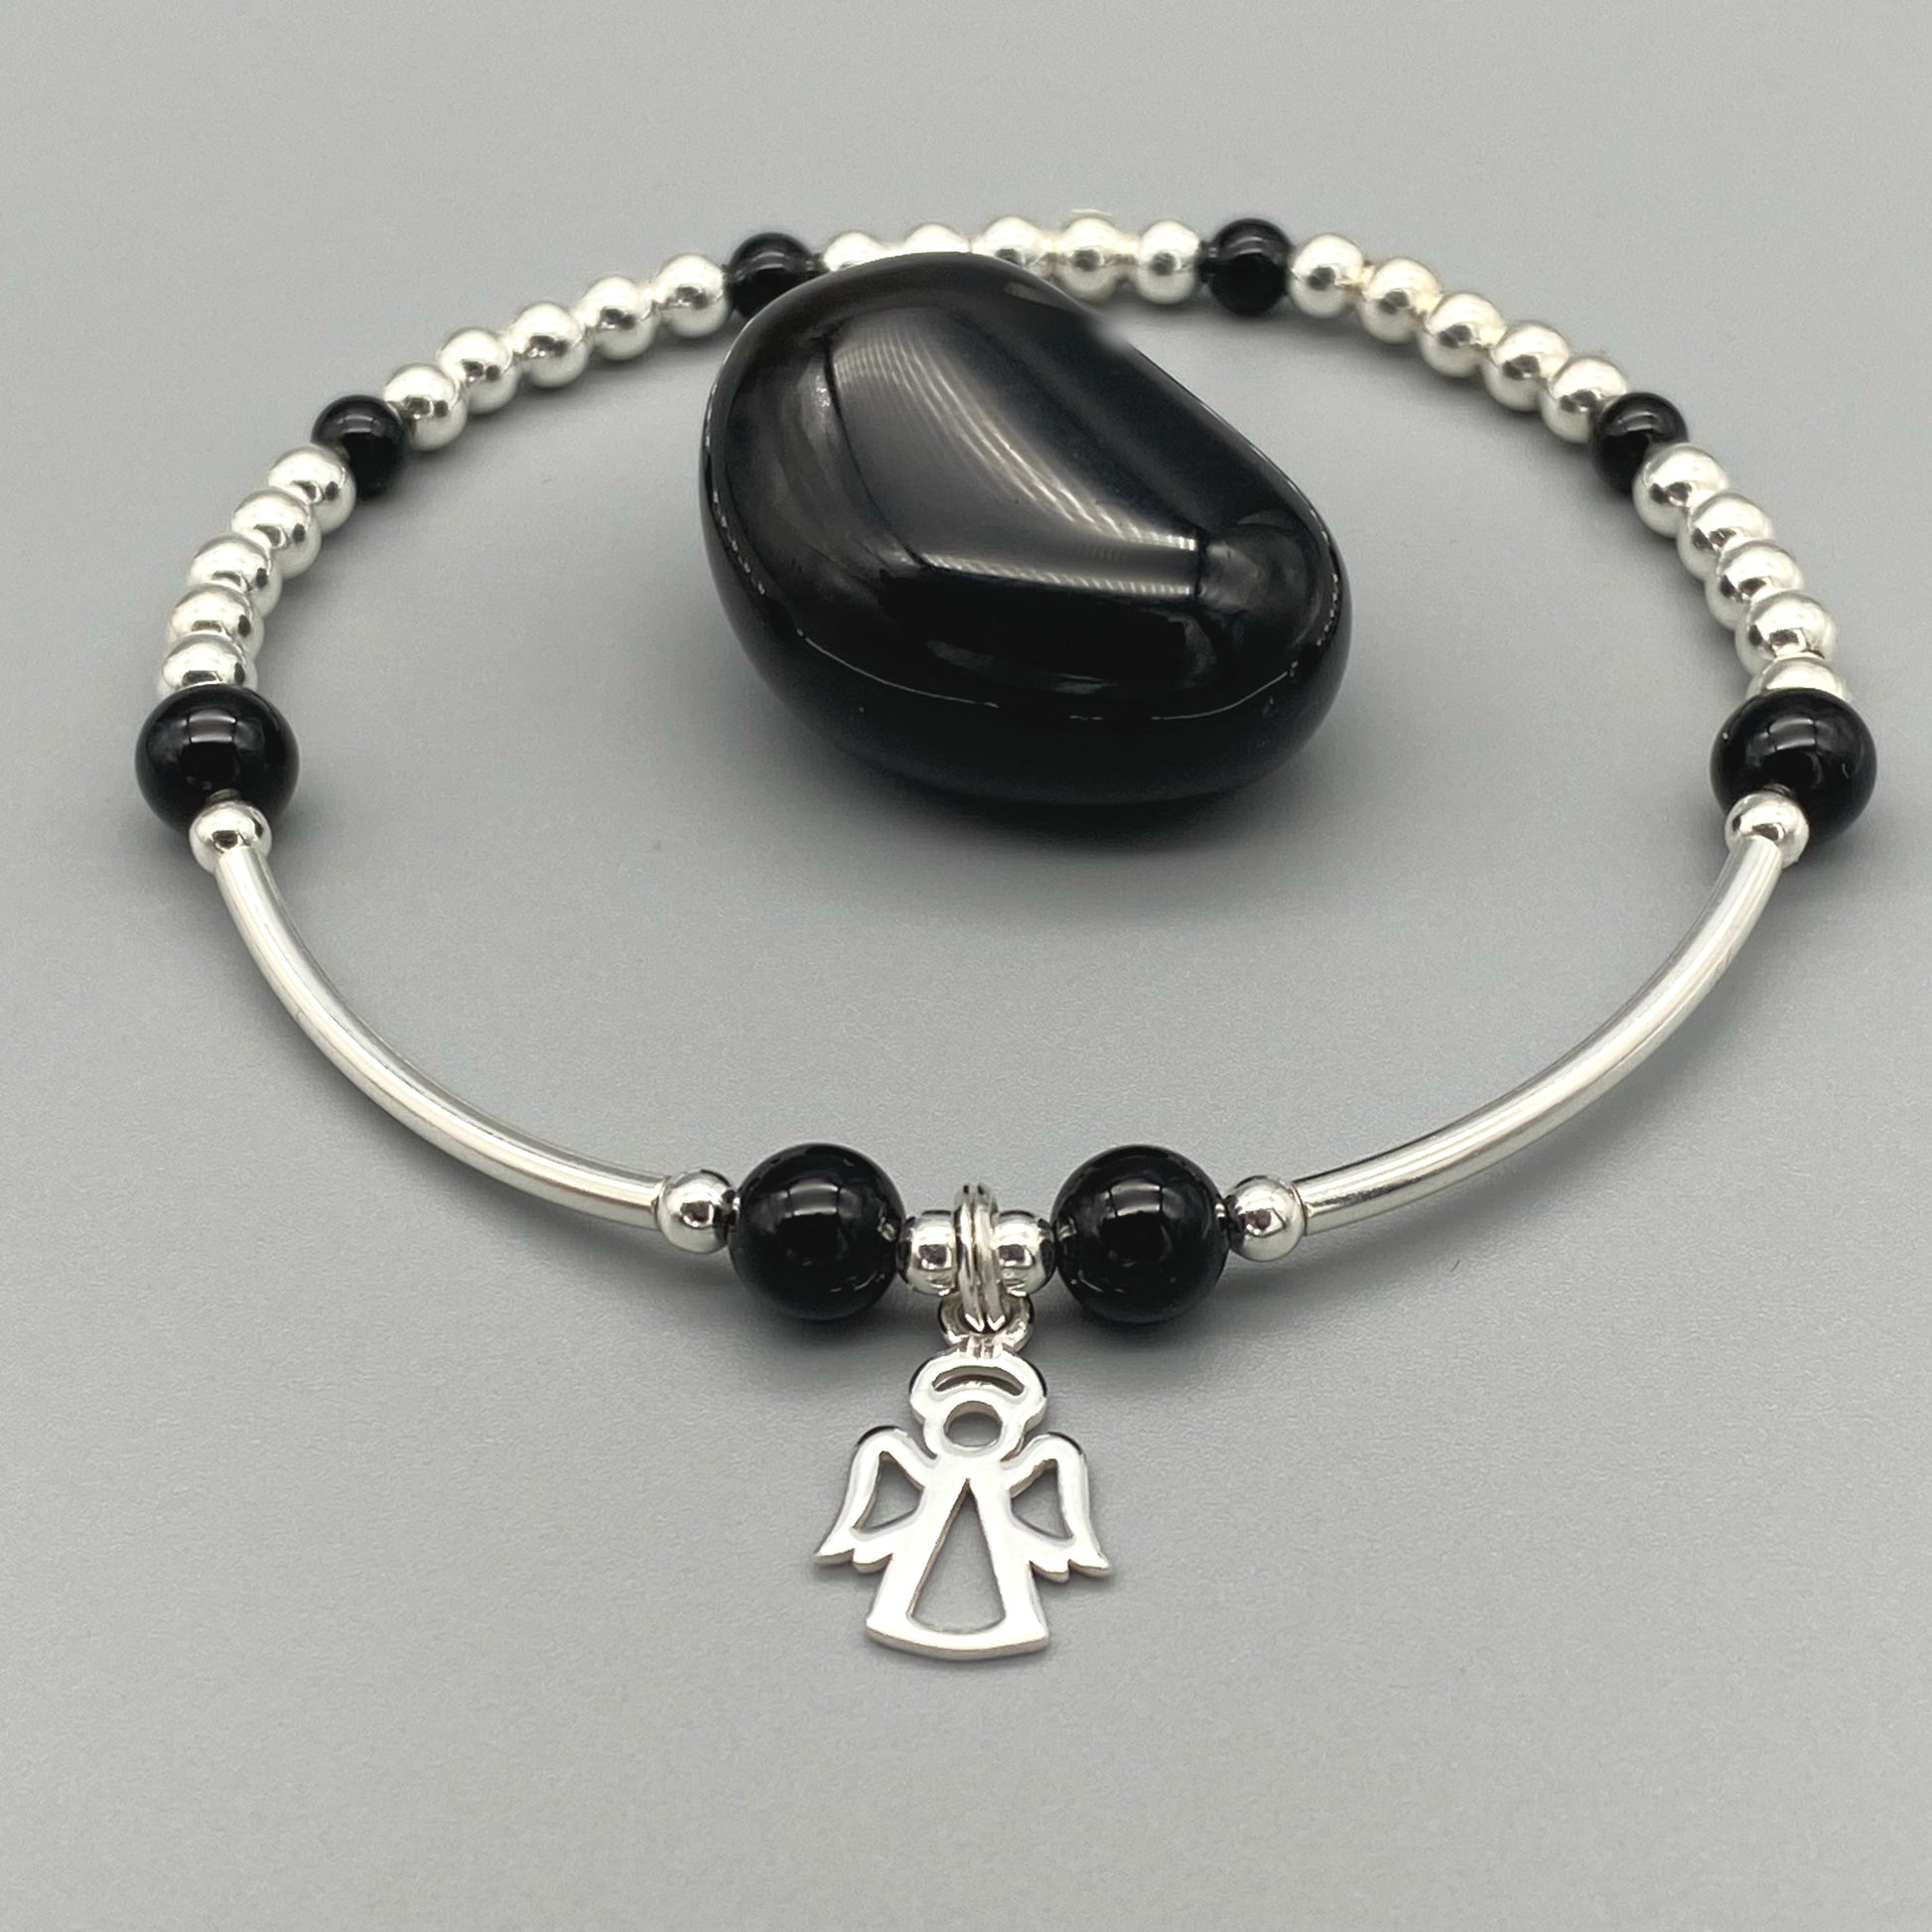 Angel charm black onyx gemstone women's sterling silver stacking bracelet by My Silver Wish